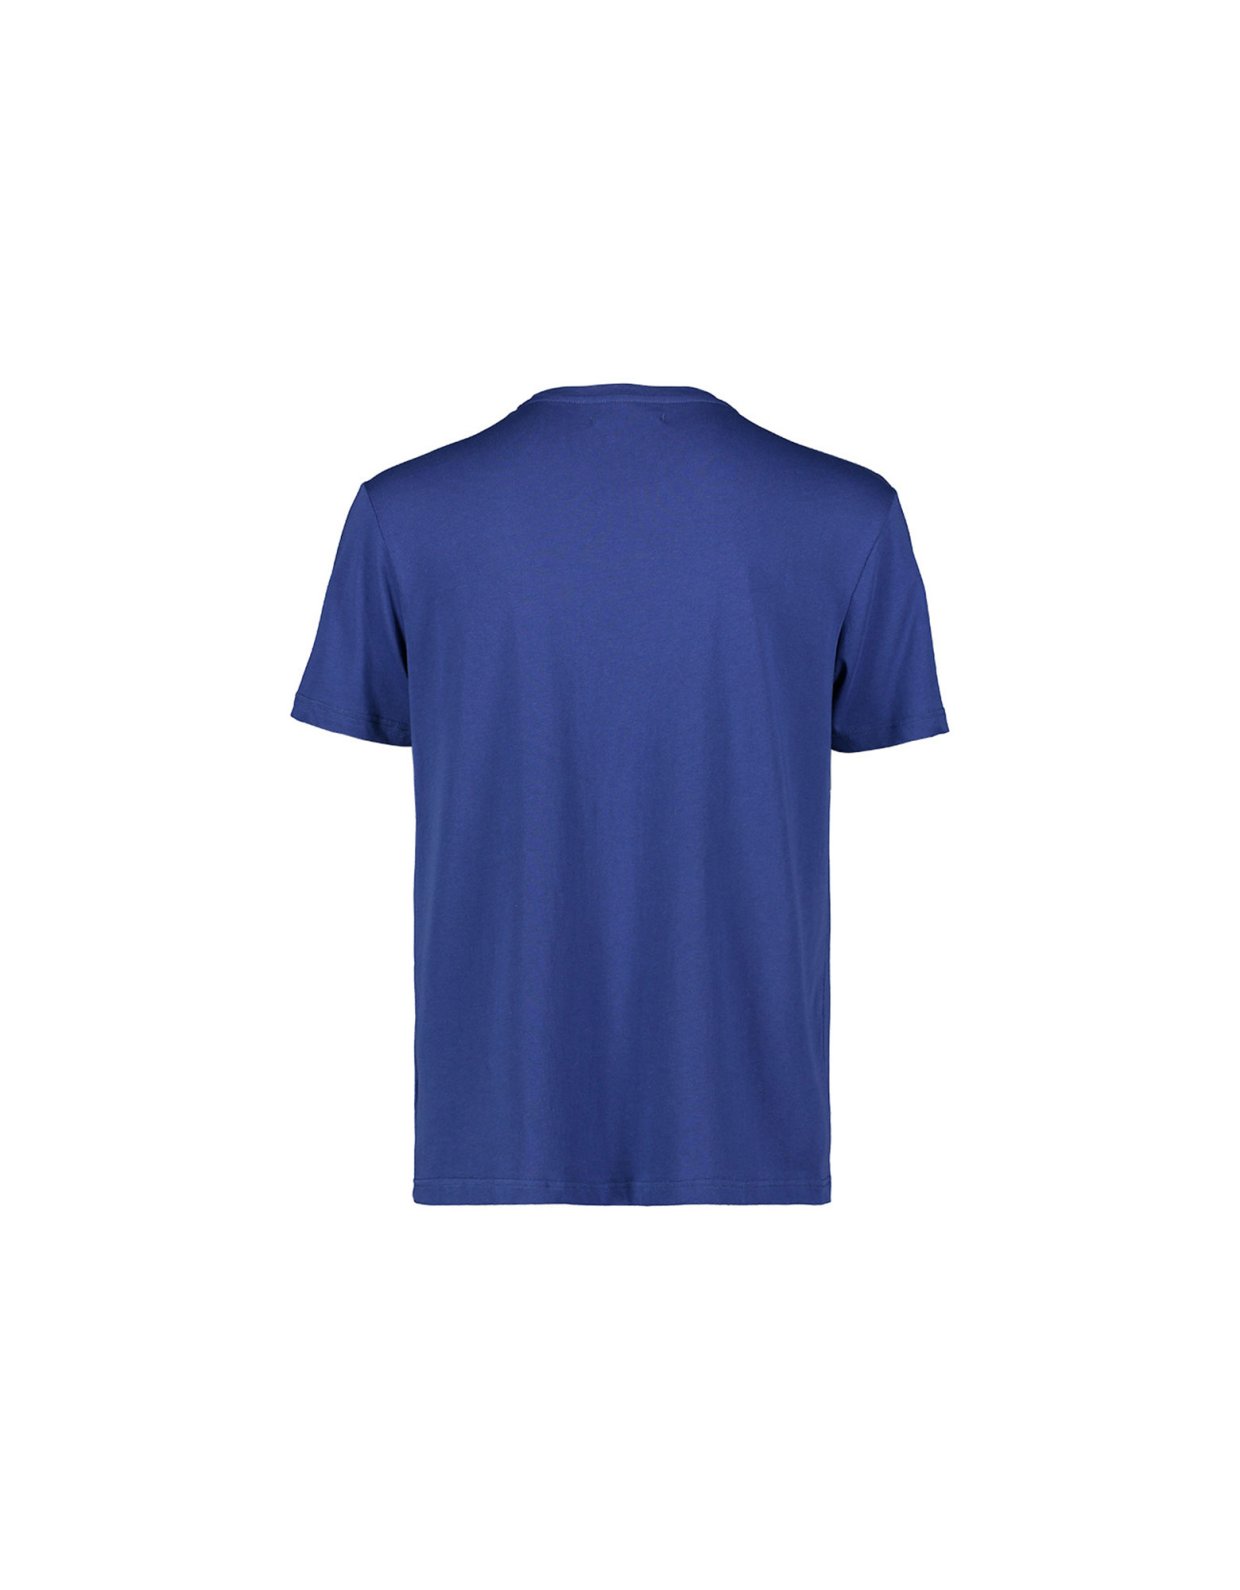 Gaudi New life t-shirt sodalite blue